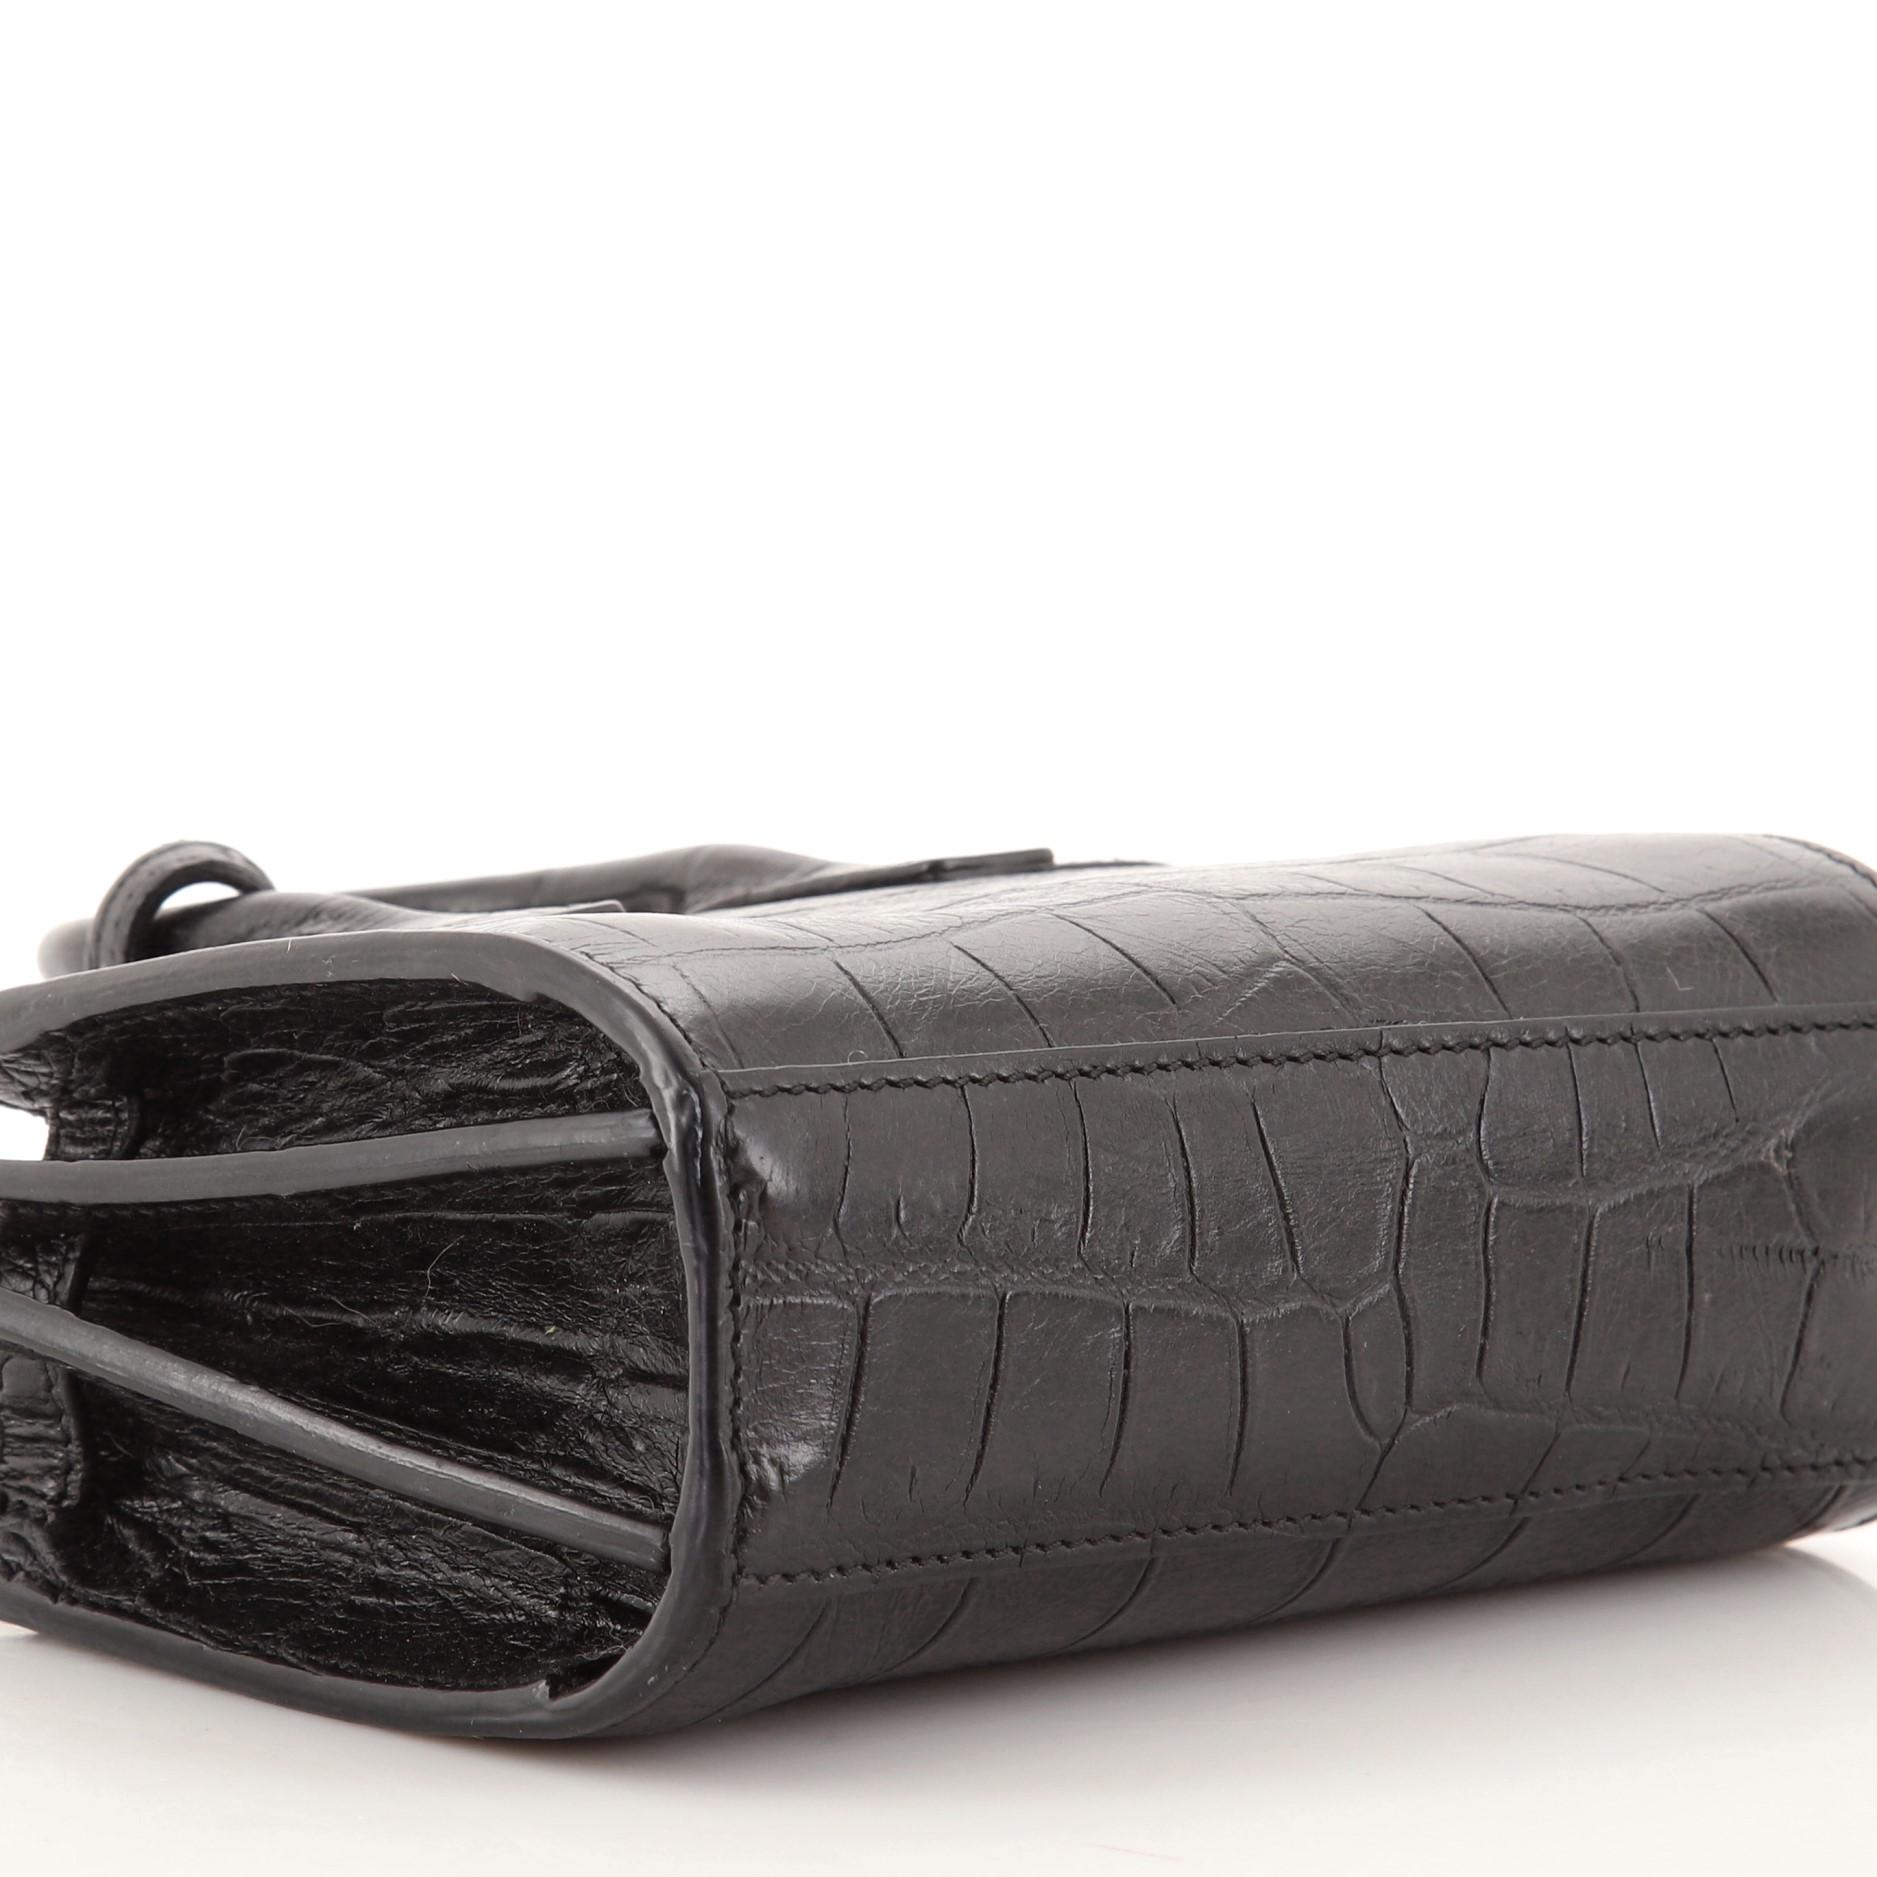 Black Saint Laurent Sac de Jour Bag Crocodile Embossed Leather Toy